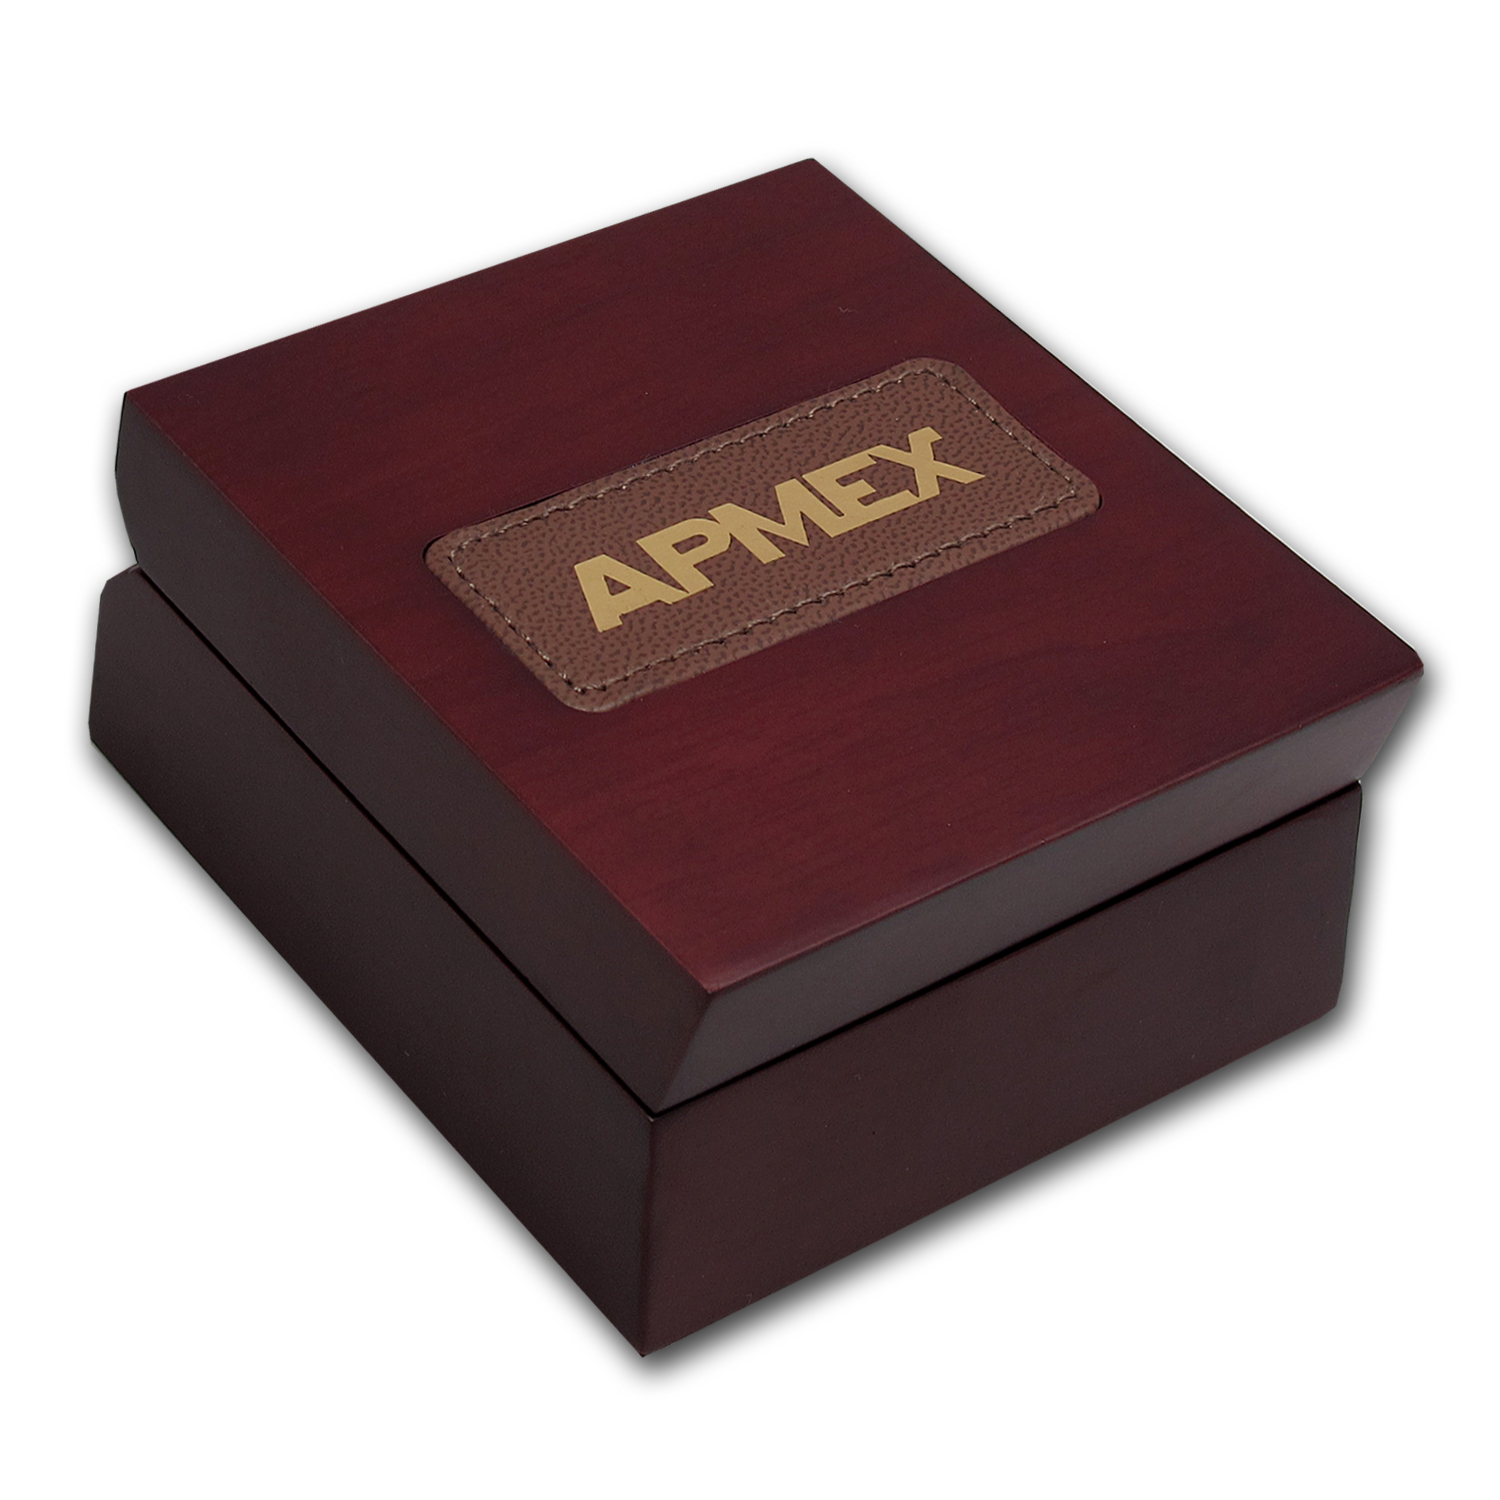 Buy APMEX Wood Gift Box - 1 oz Perth Mint Gold Coin